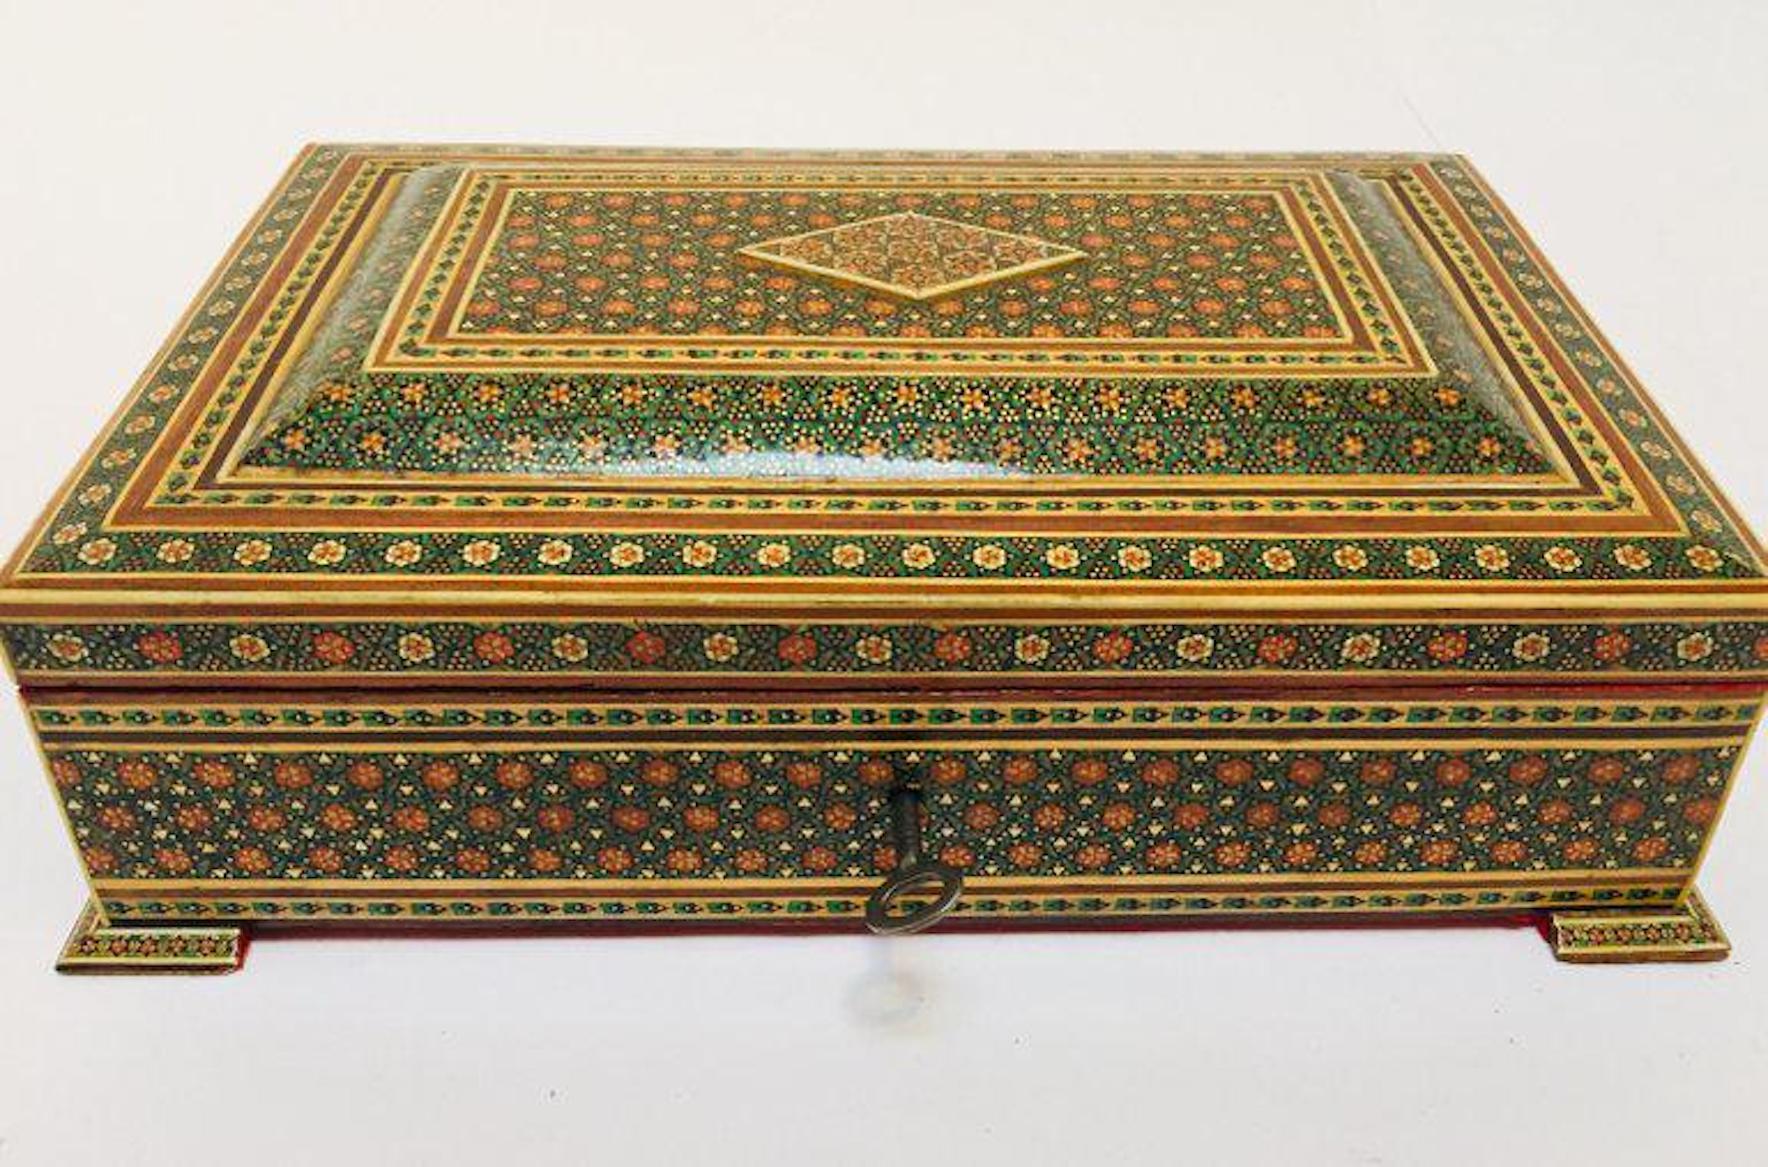 1940s Moorish Anglo-Indian Jewelry Mosaic Khatam Inlaid Box 2